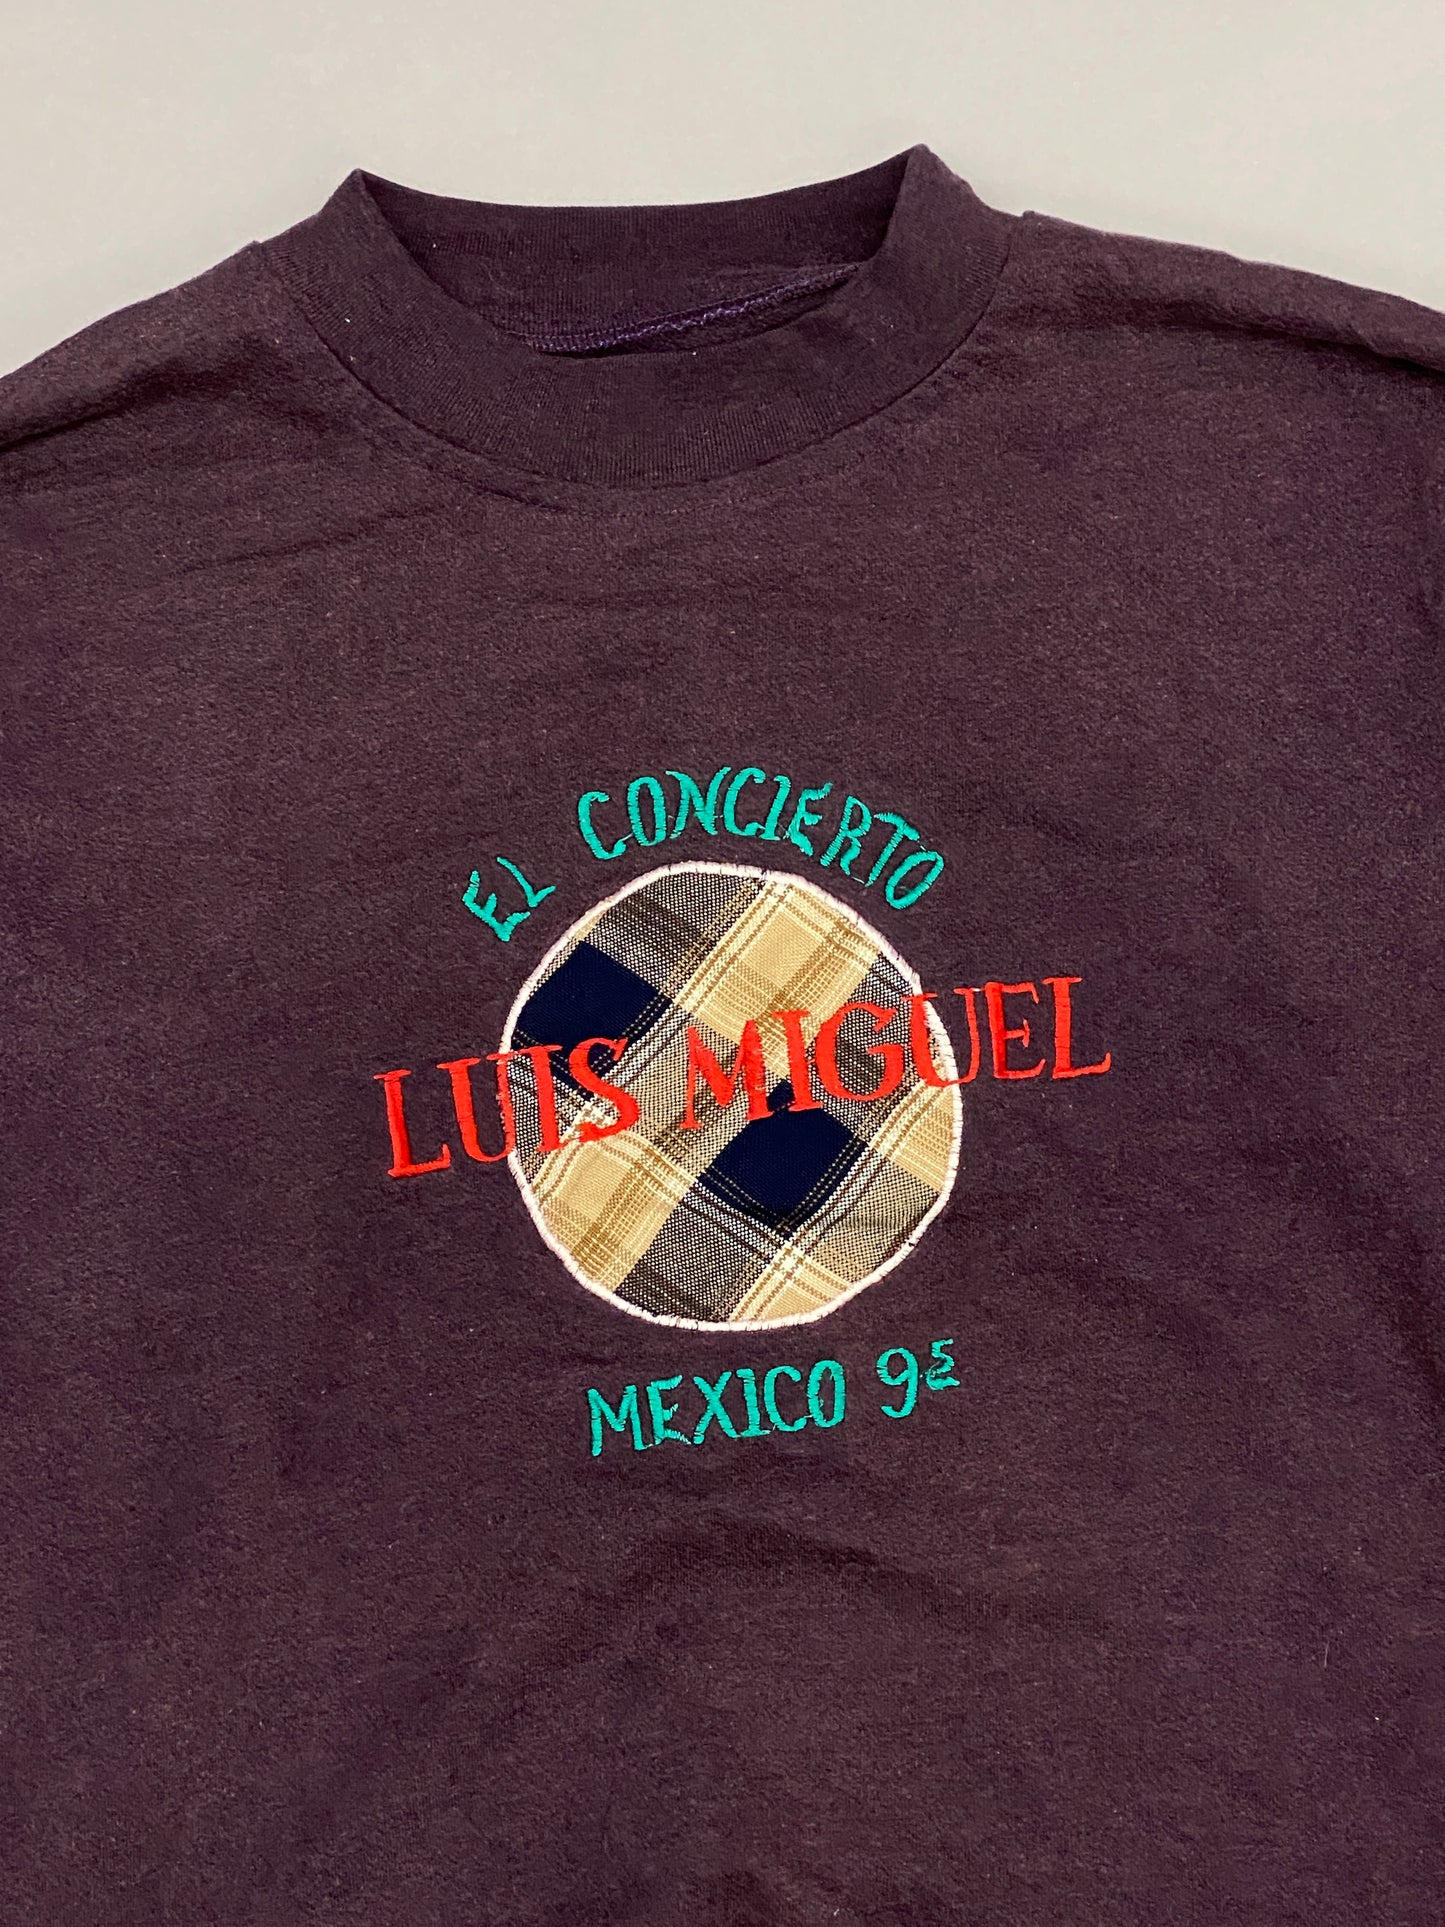 Luis Miguel 1995 Vintage Sweatshirt